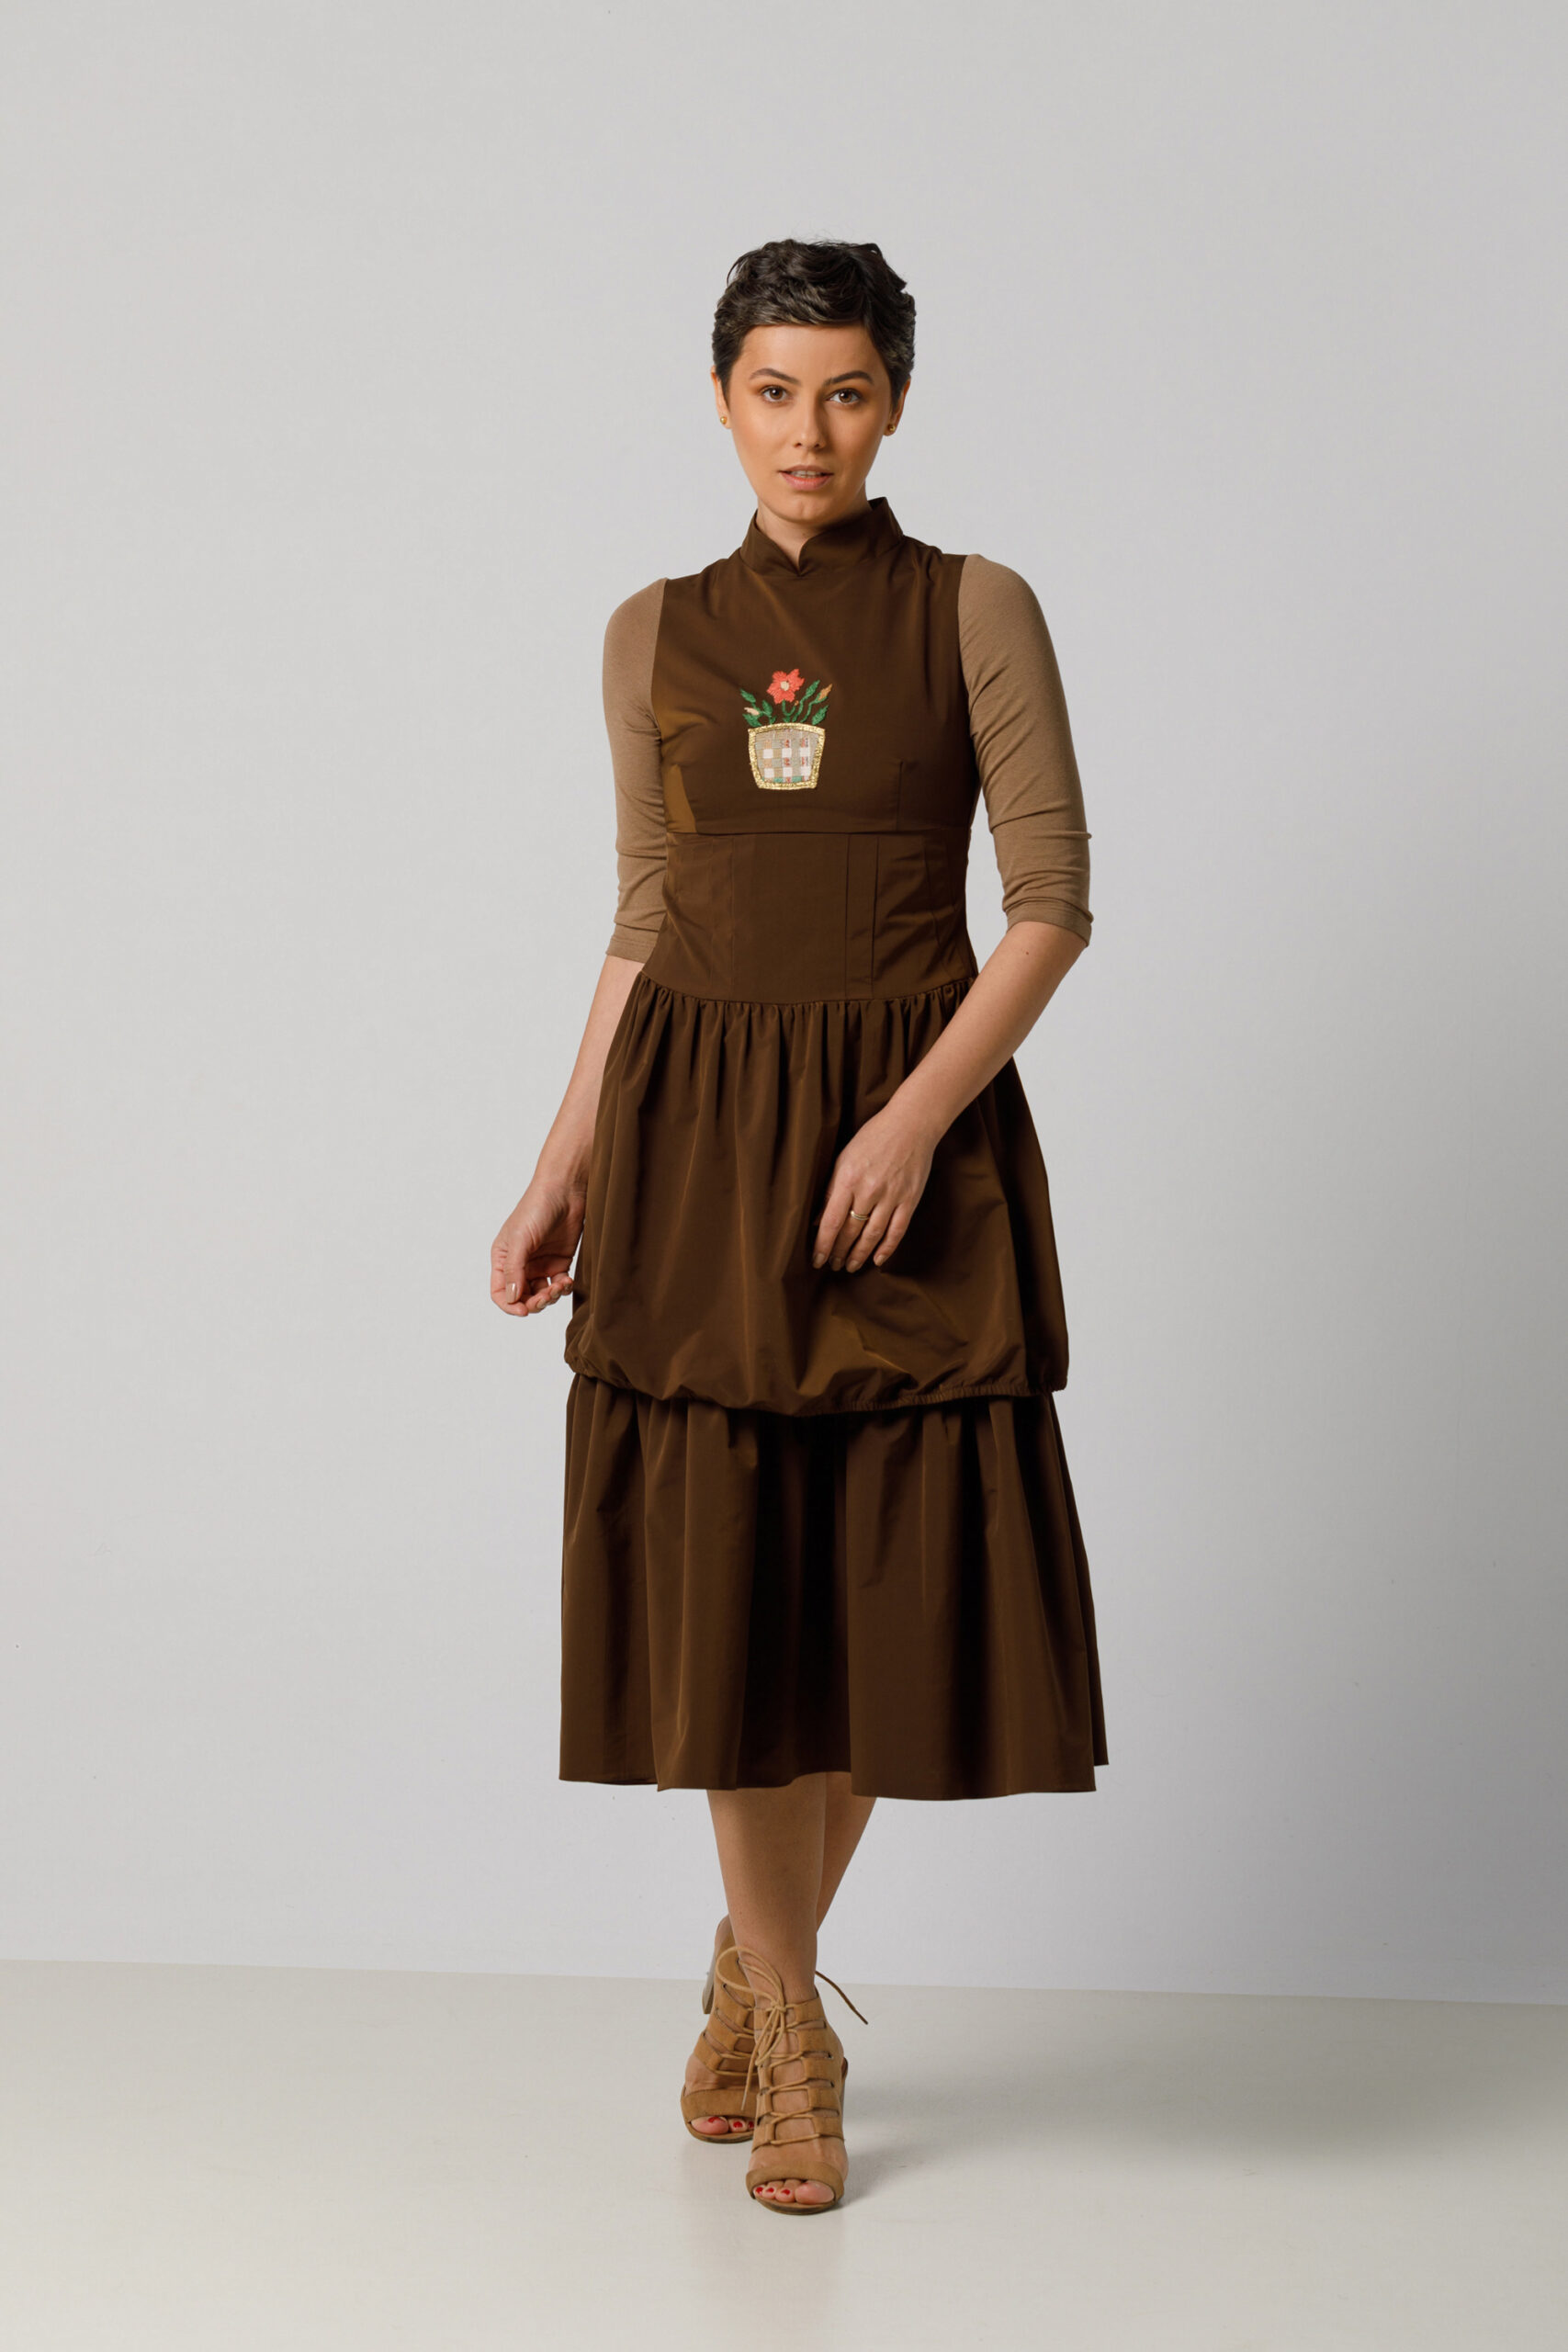 AVENA Long brown dress with double ruffles. Natural fabrics, original design, handmade embroidery